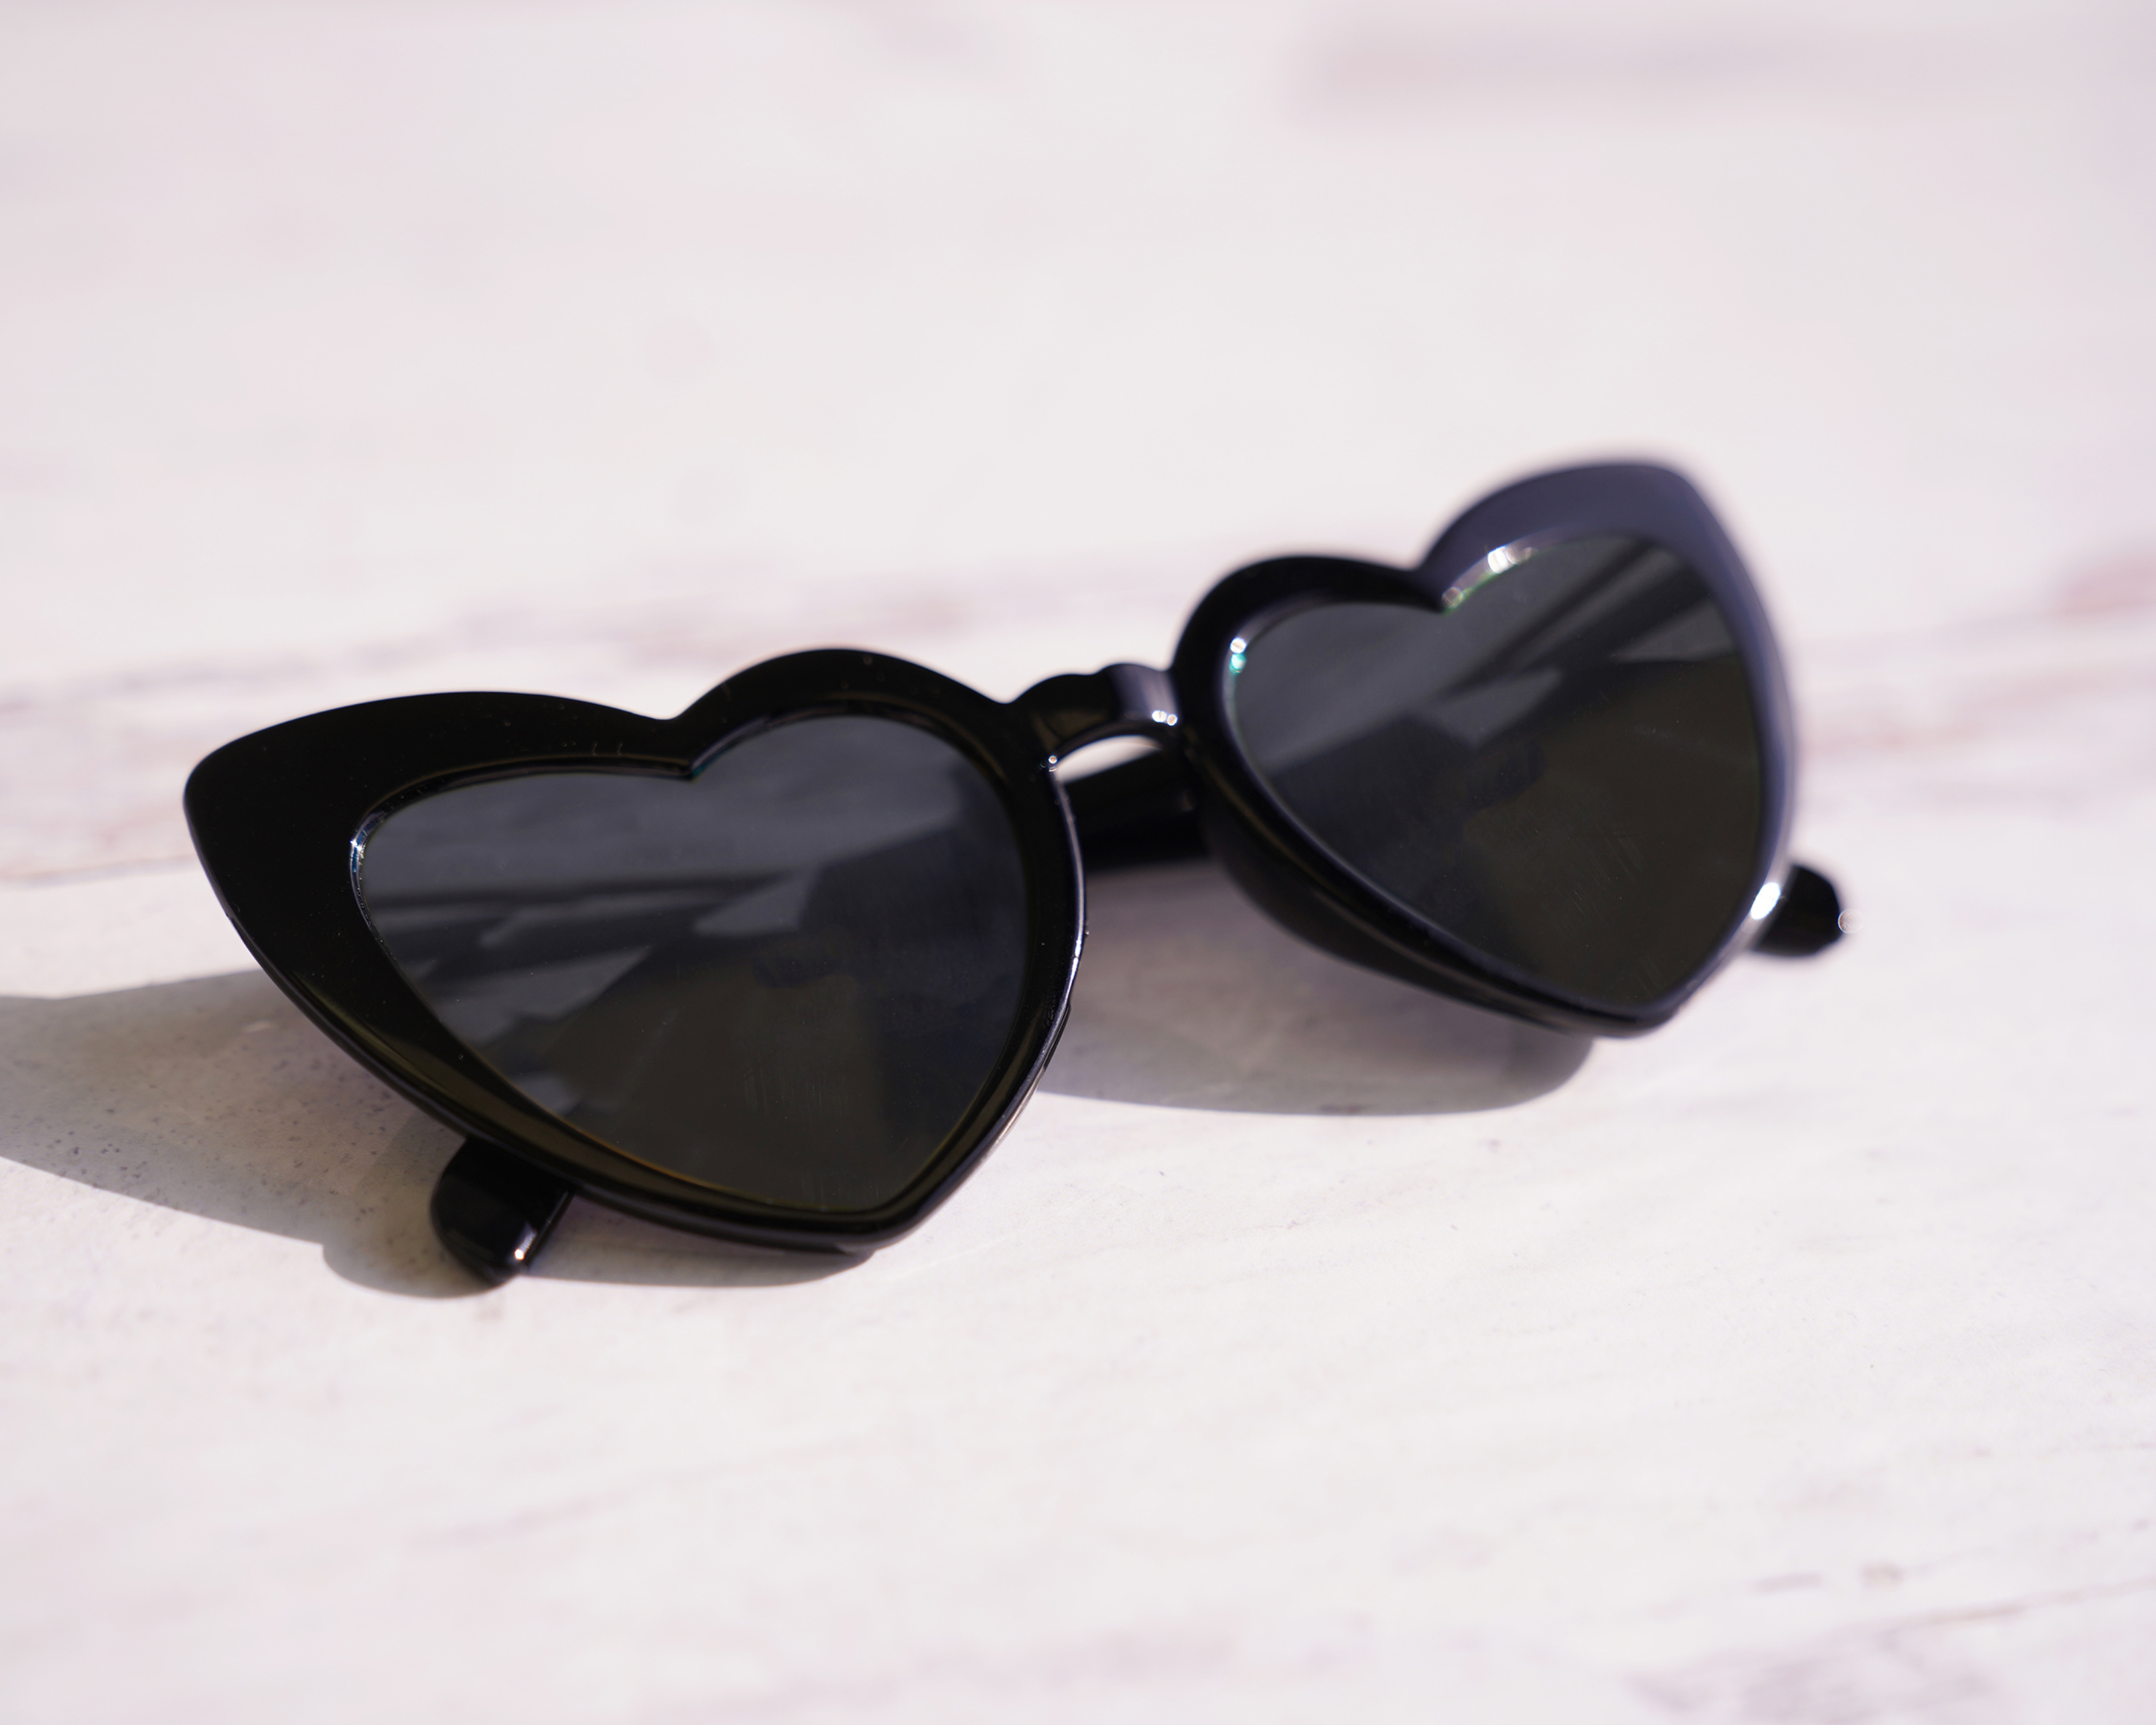 Set of 6 Heart Sunglasses